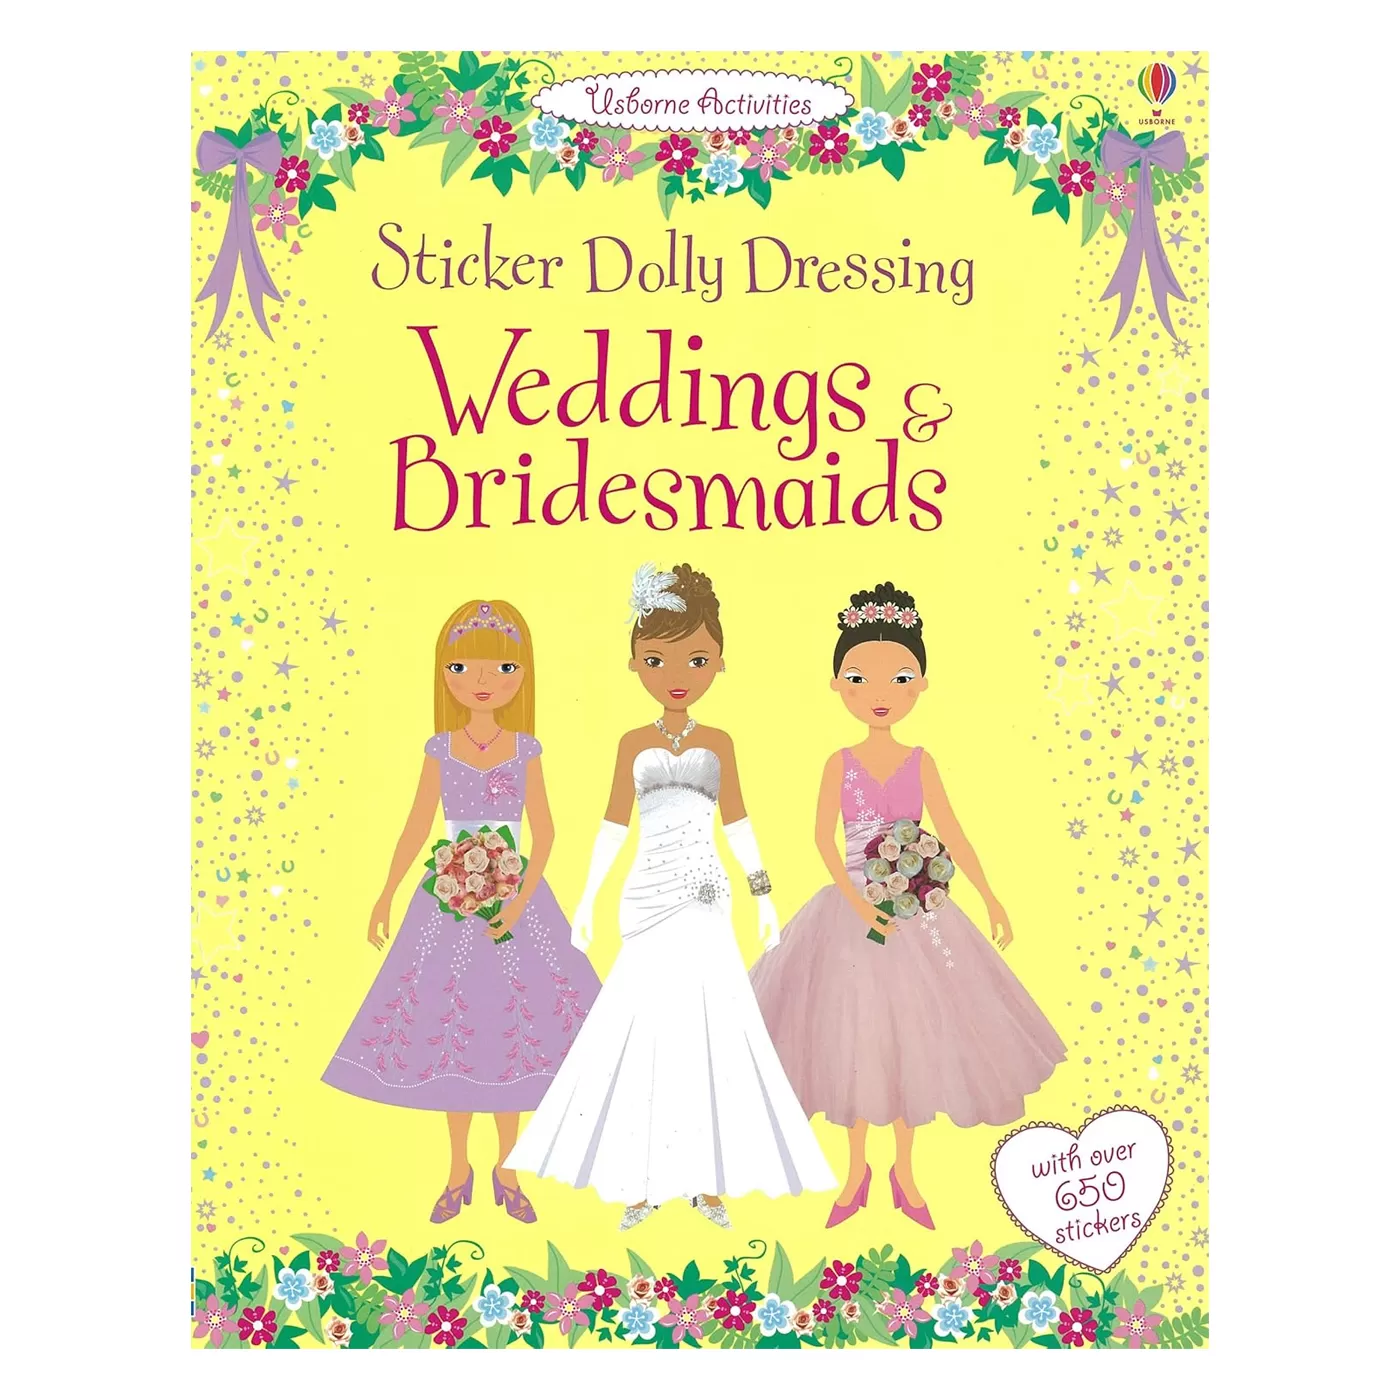 USBORNE Sticker Dolly Dressing Weddings & Bridesmaids